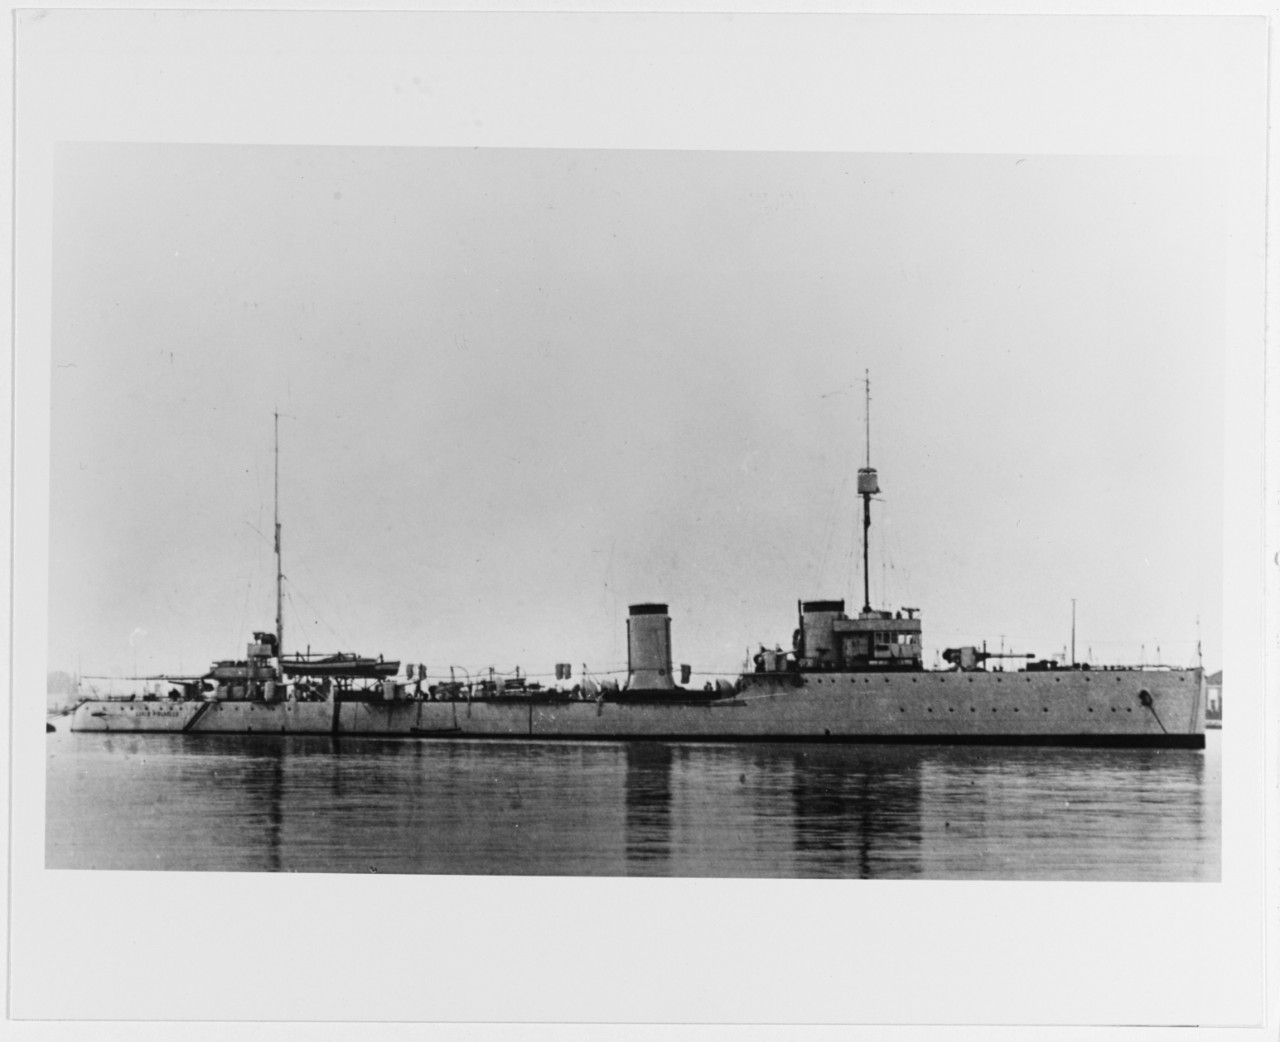 CARLO MIRABELLO (Italian destroyer, 1915-1941)